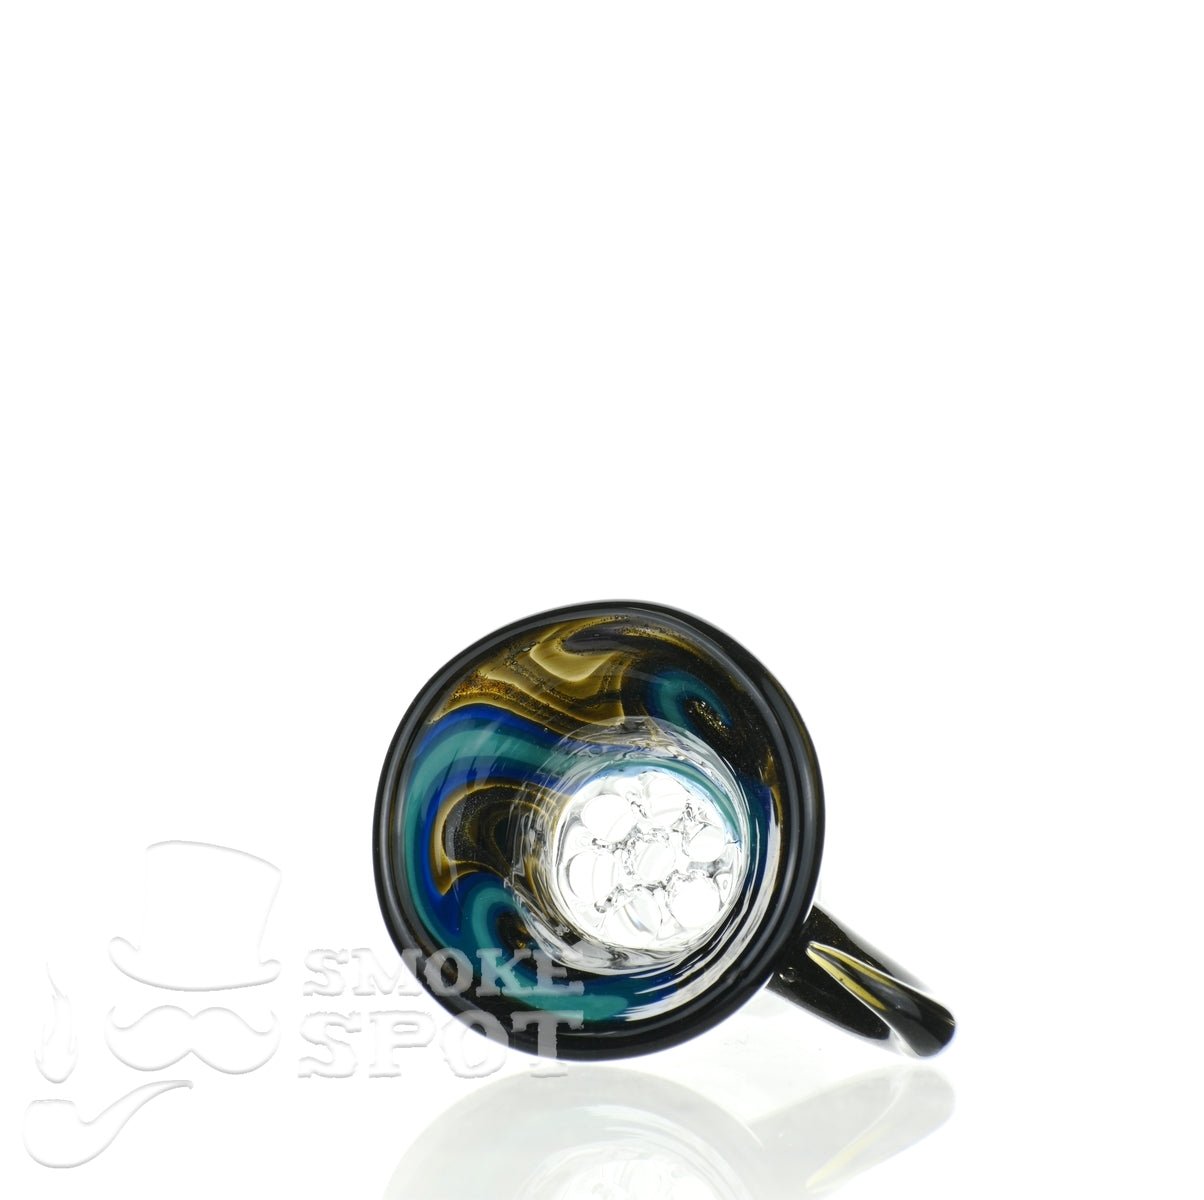 Glass enthuastic bowl 14 mm with a hook #104 - Smoke Spot Smoke Shop